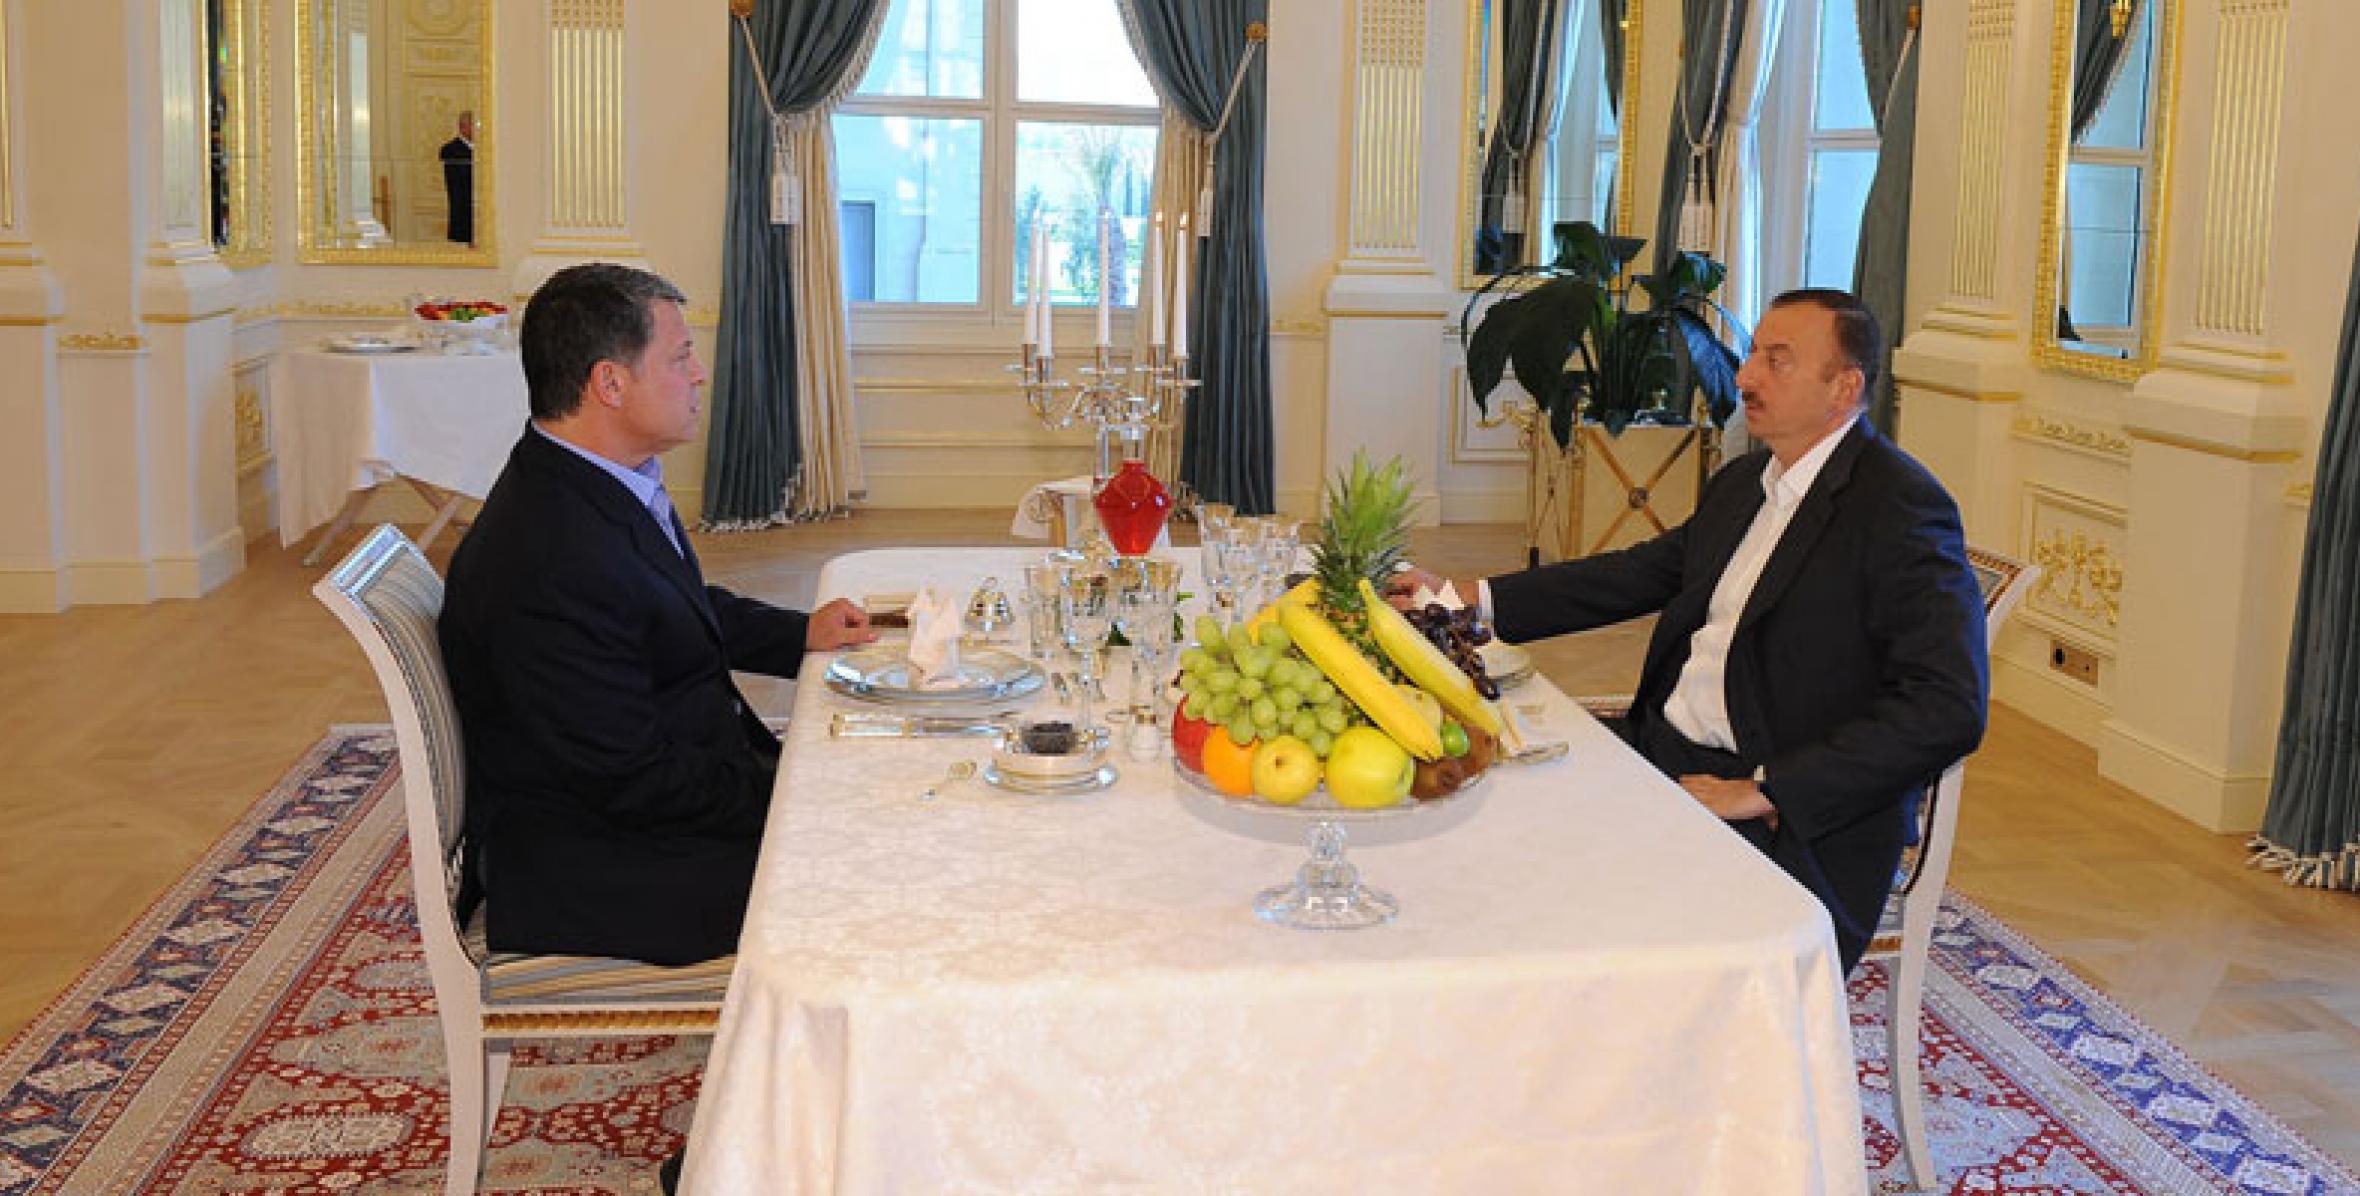 Ilham Aliyev hosted an official dinner in honor of King of Jordan, II Abdullah